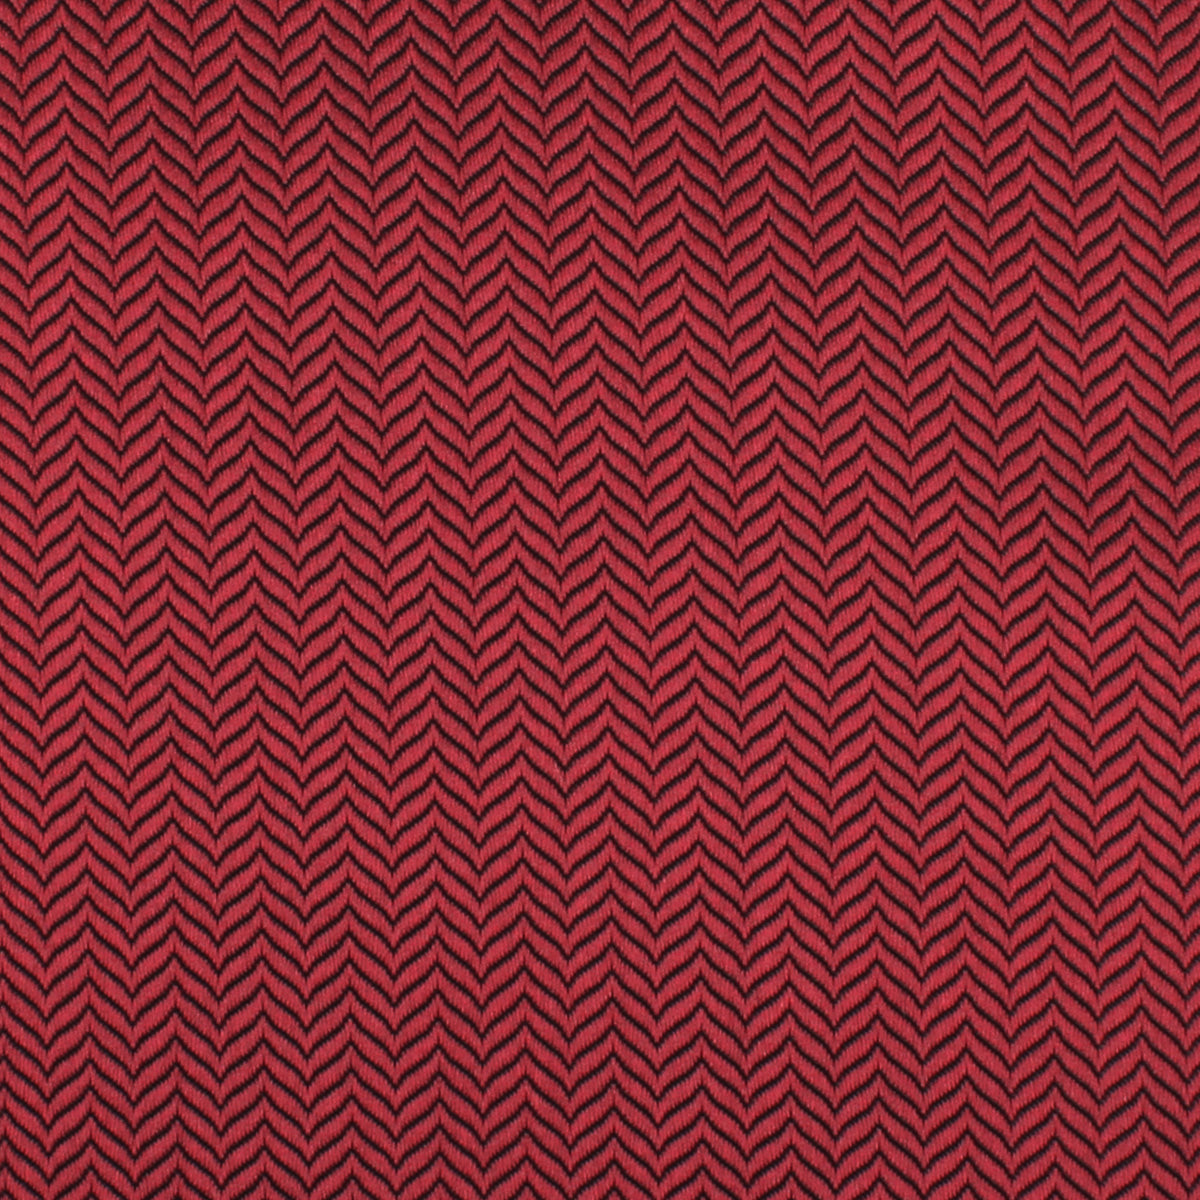 Burgundy Herringbone Necktie Fabric